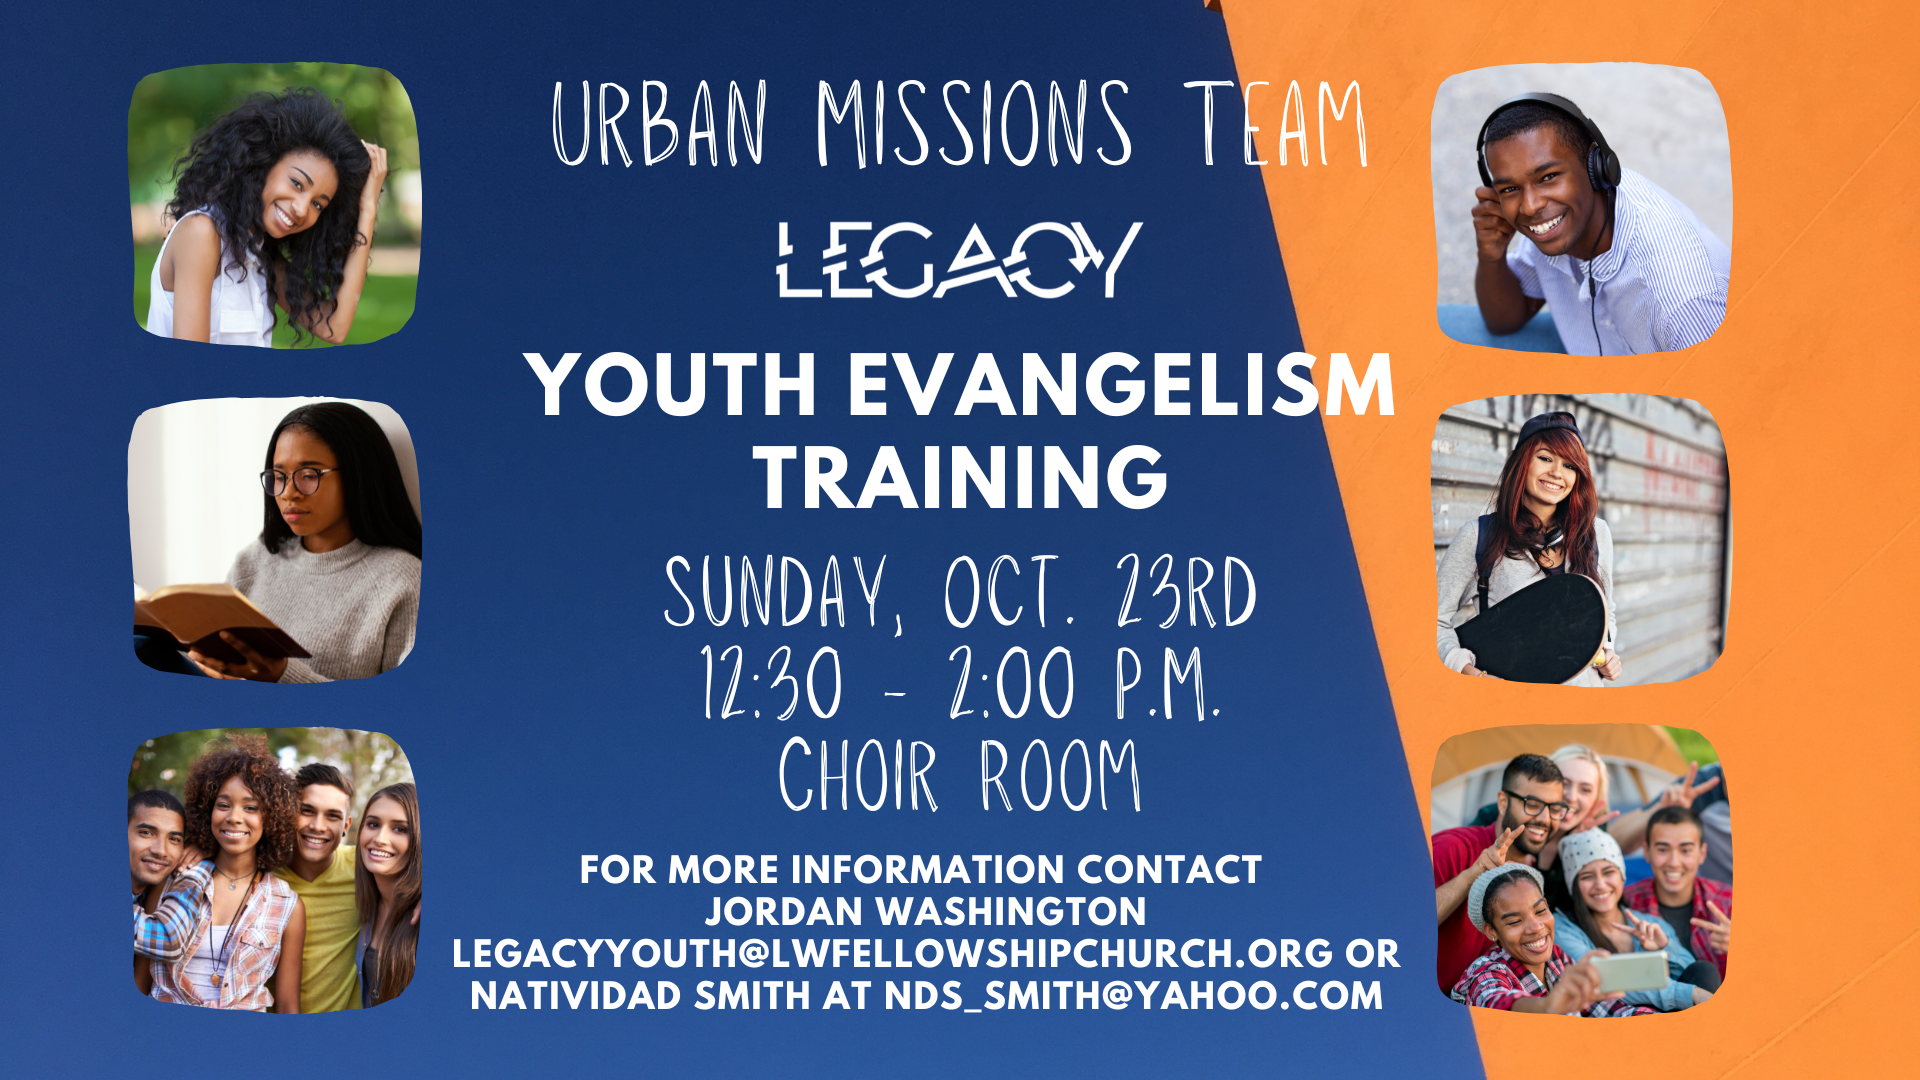 URBAN MISSIONS TEAM YOUTH EVANGELISM TRAINING head image